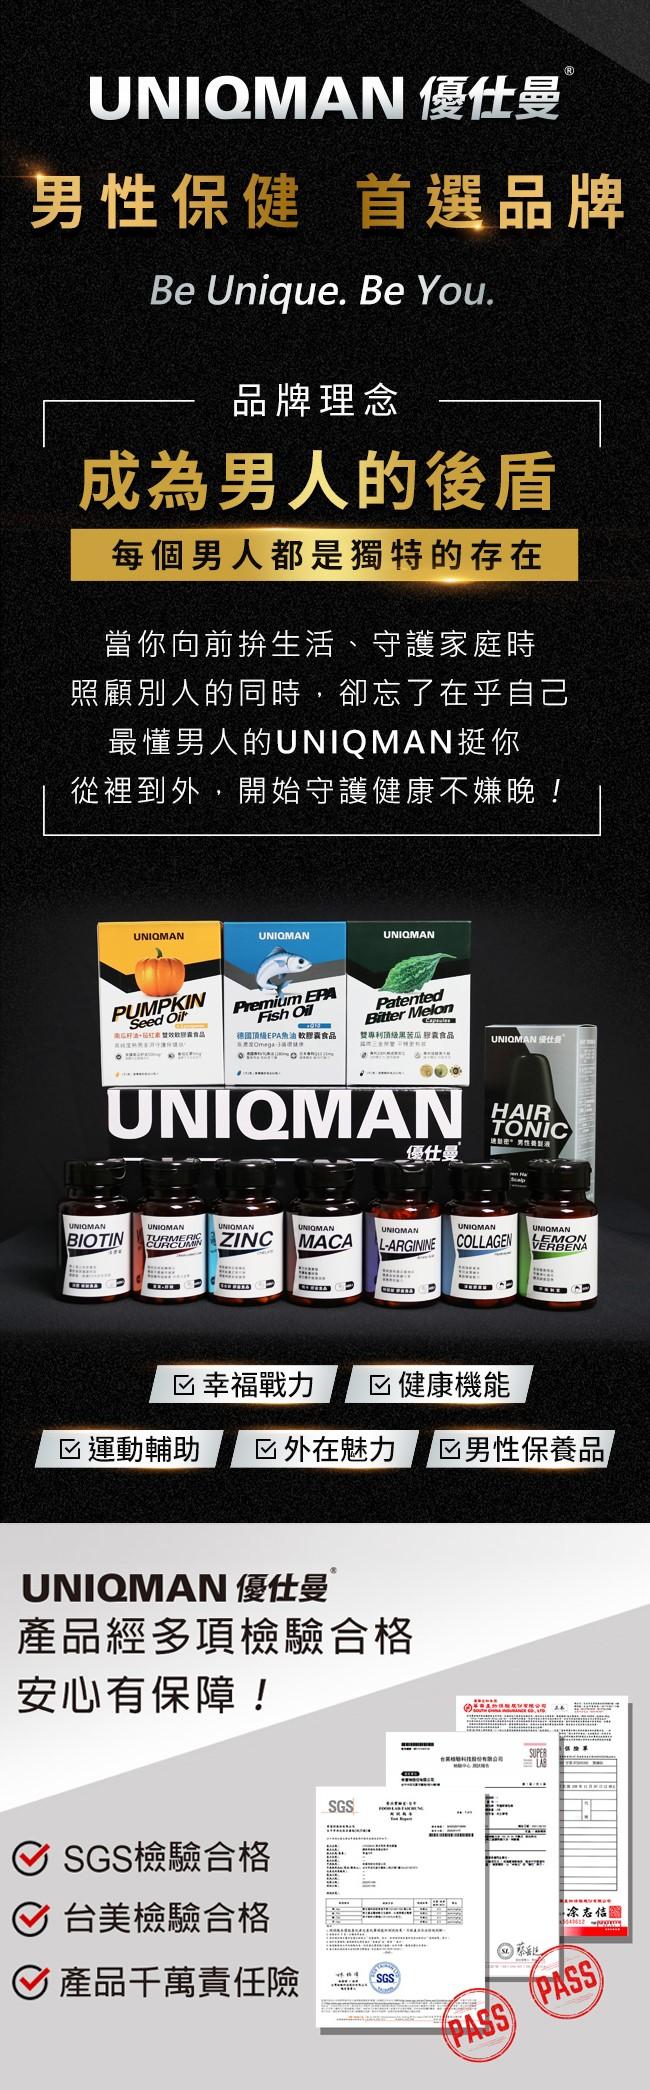 UNIQMAN-帝王蜆膠囊食品(30粒/袋)3袋組﻿產品資訊